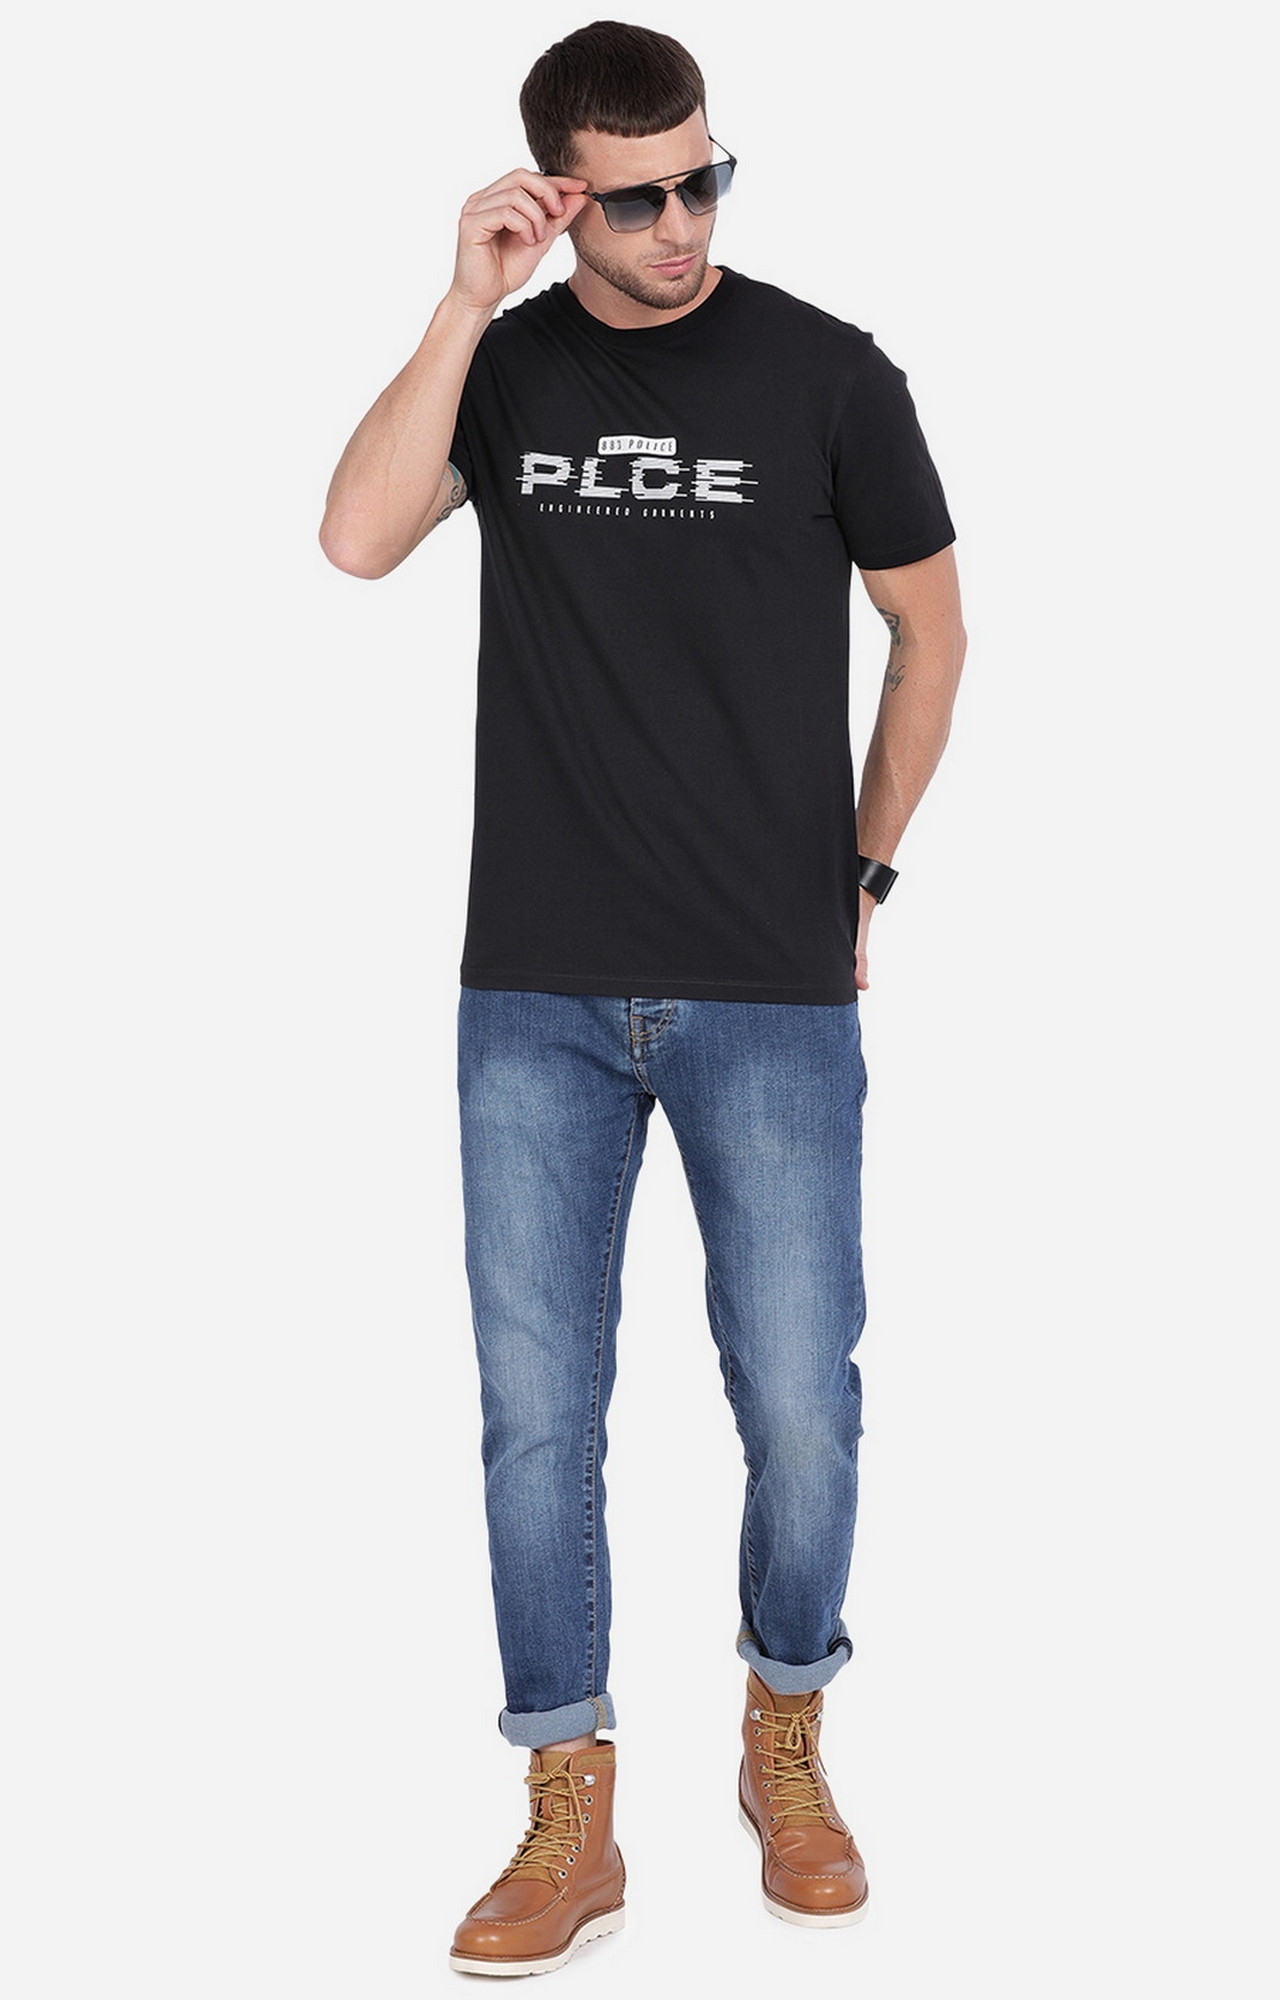 883 Police | Men's Black Cotton Typographic Printed T-Shirt 6